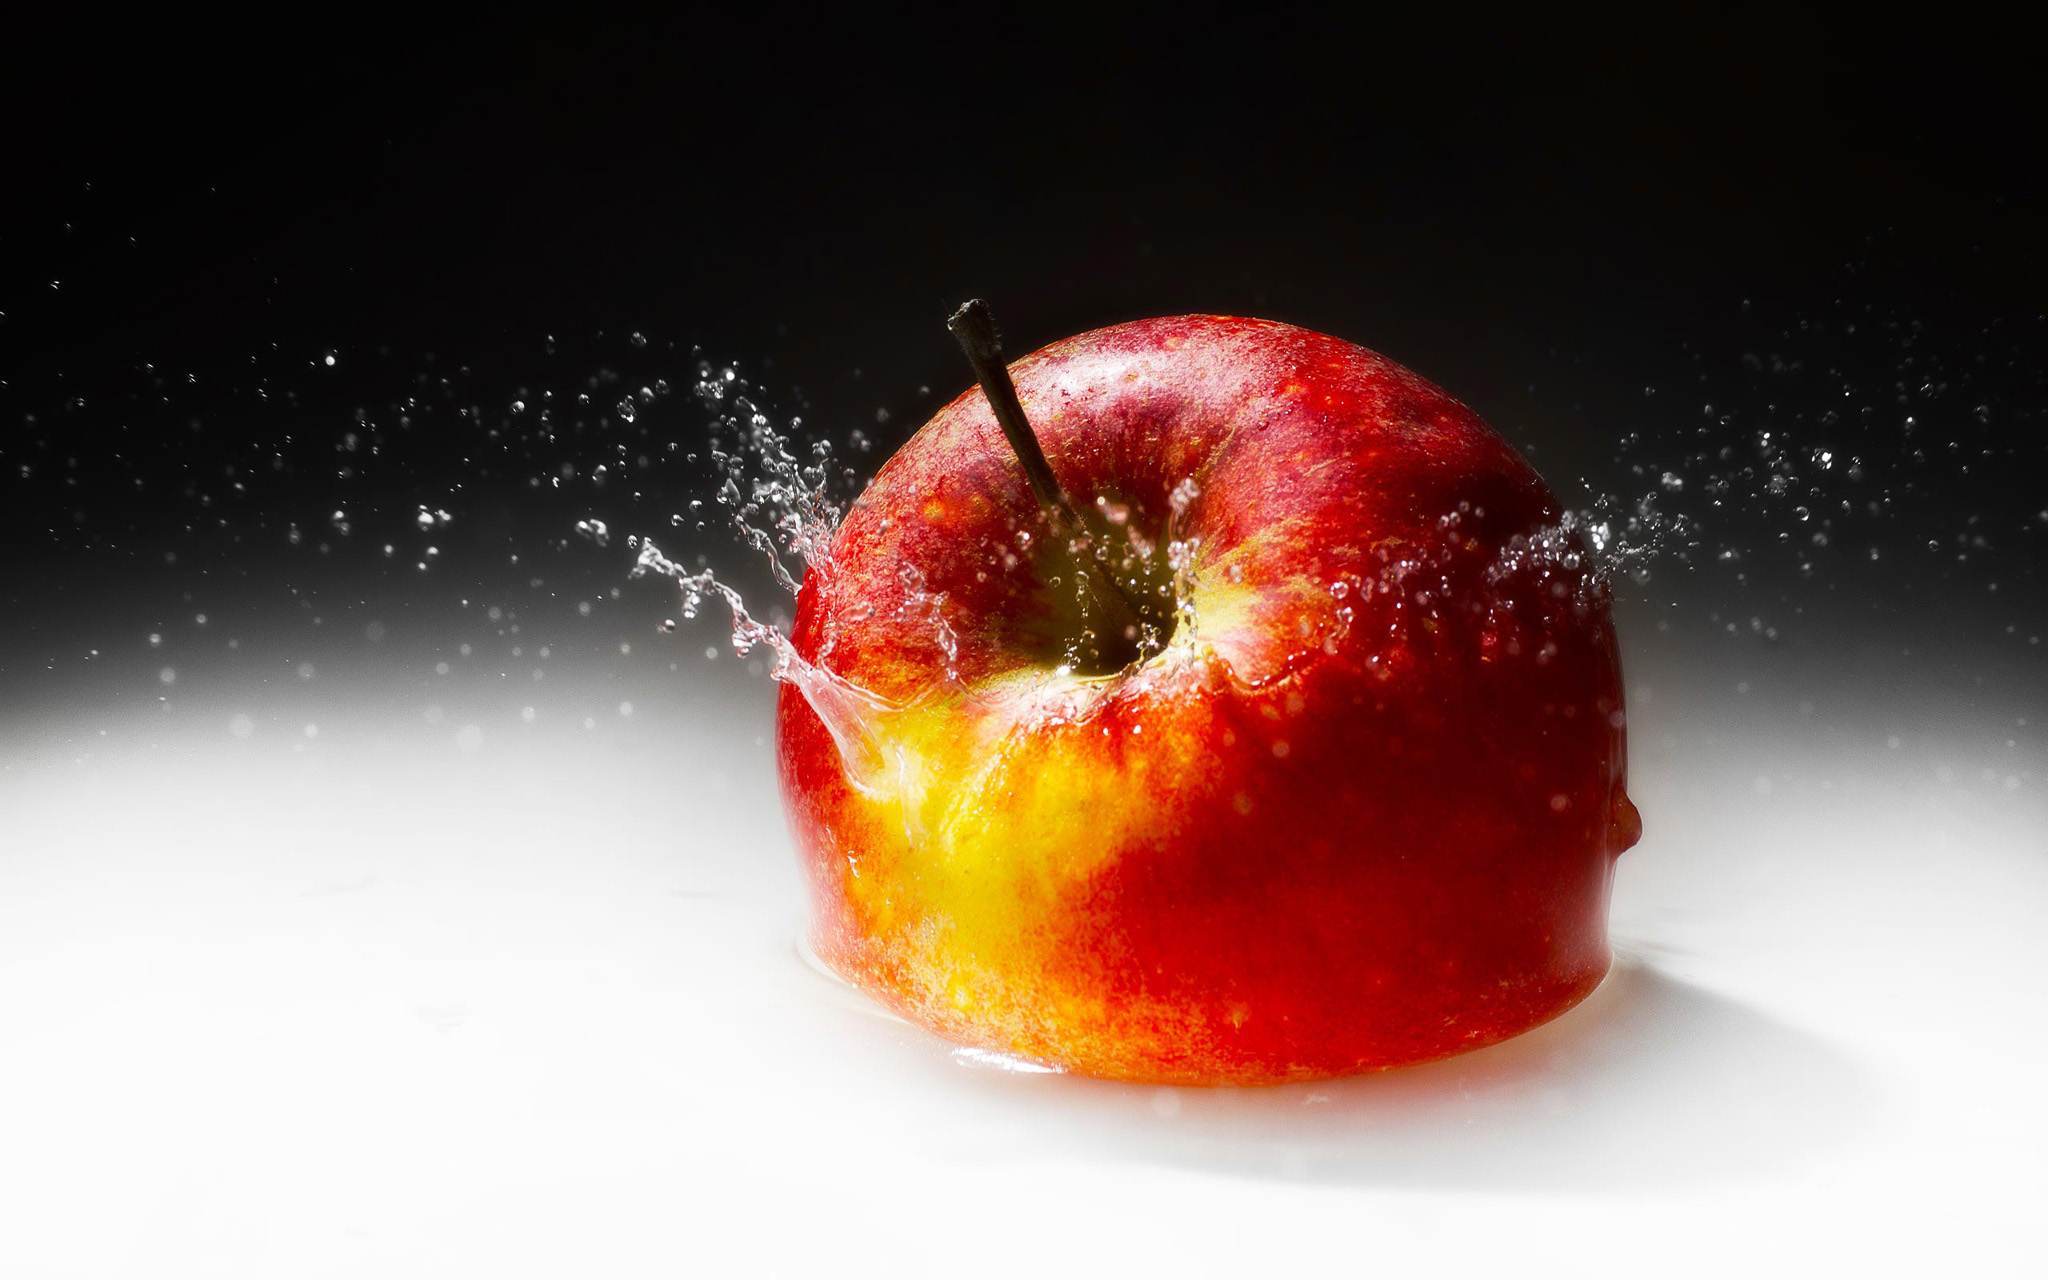 apples, fruits, food wallpaper for mobile